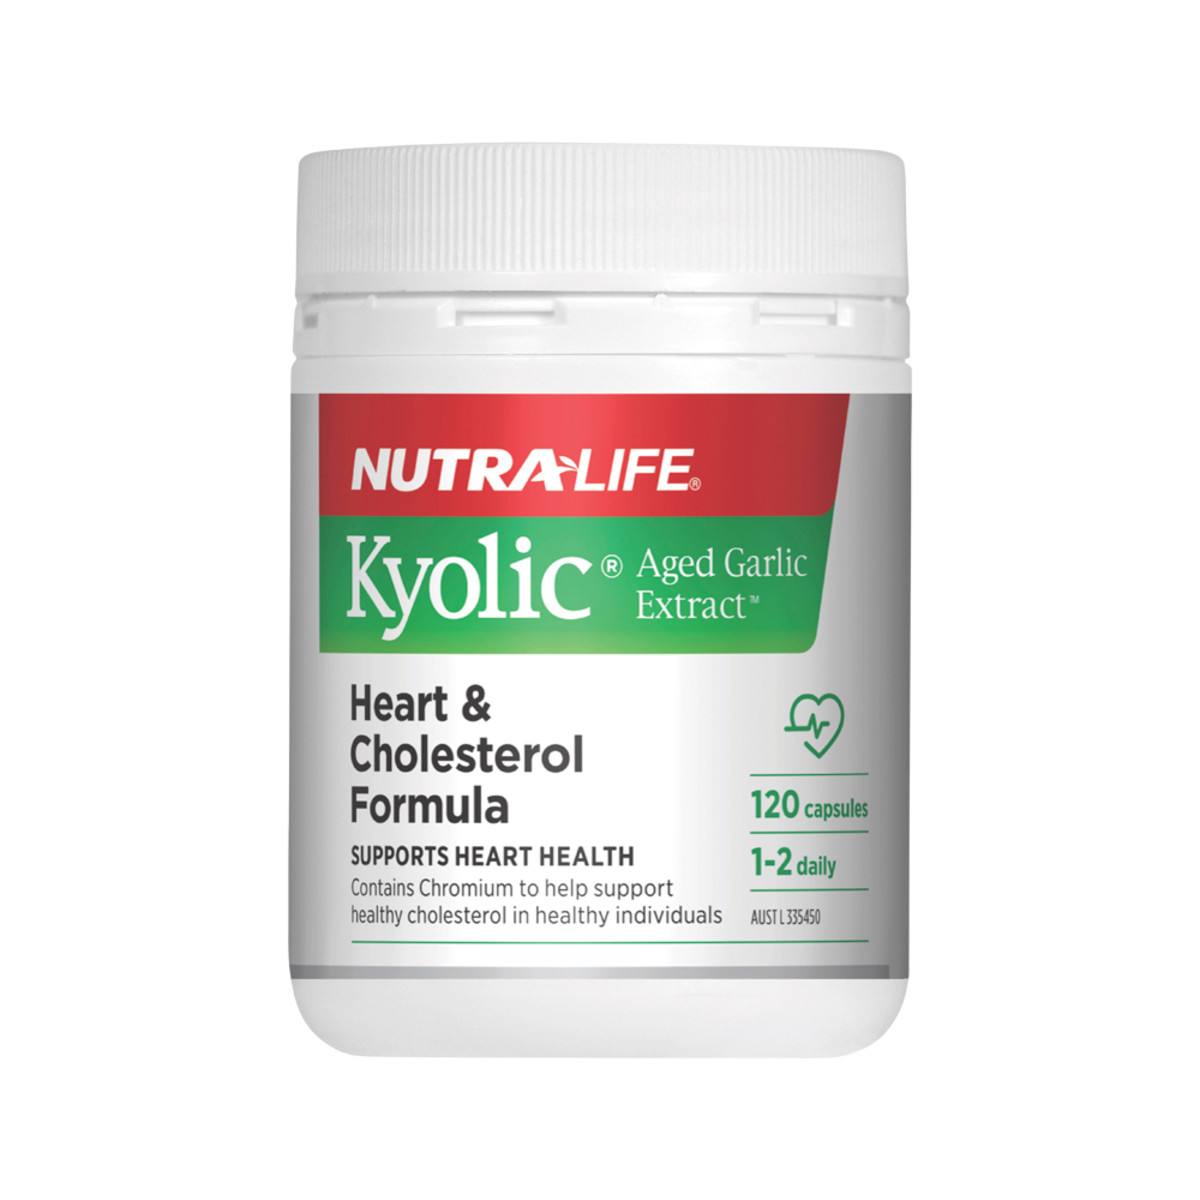 NUTRALIFE - Kyolic Aged Garlic Heart and Cholesterol Formula